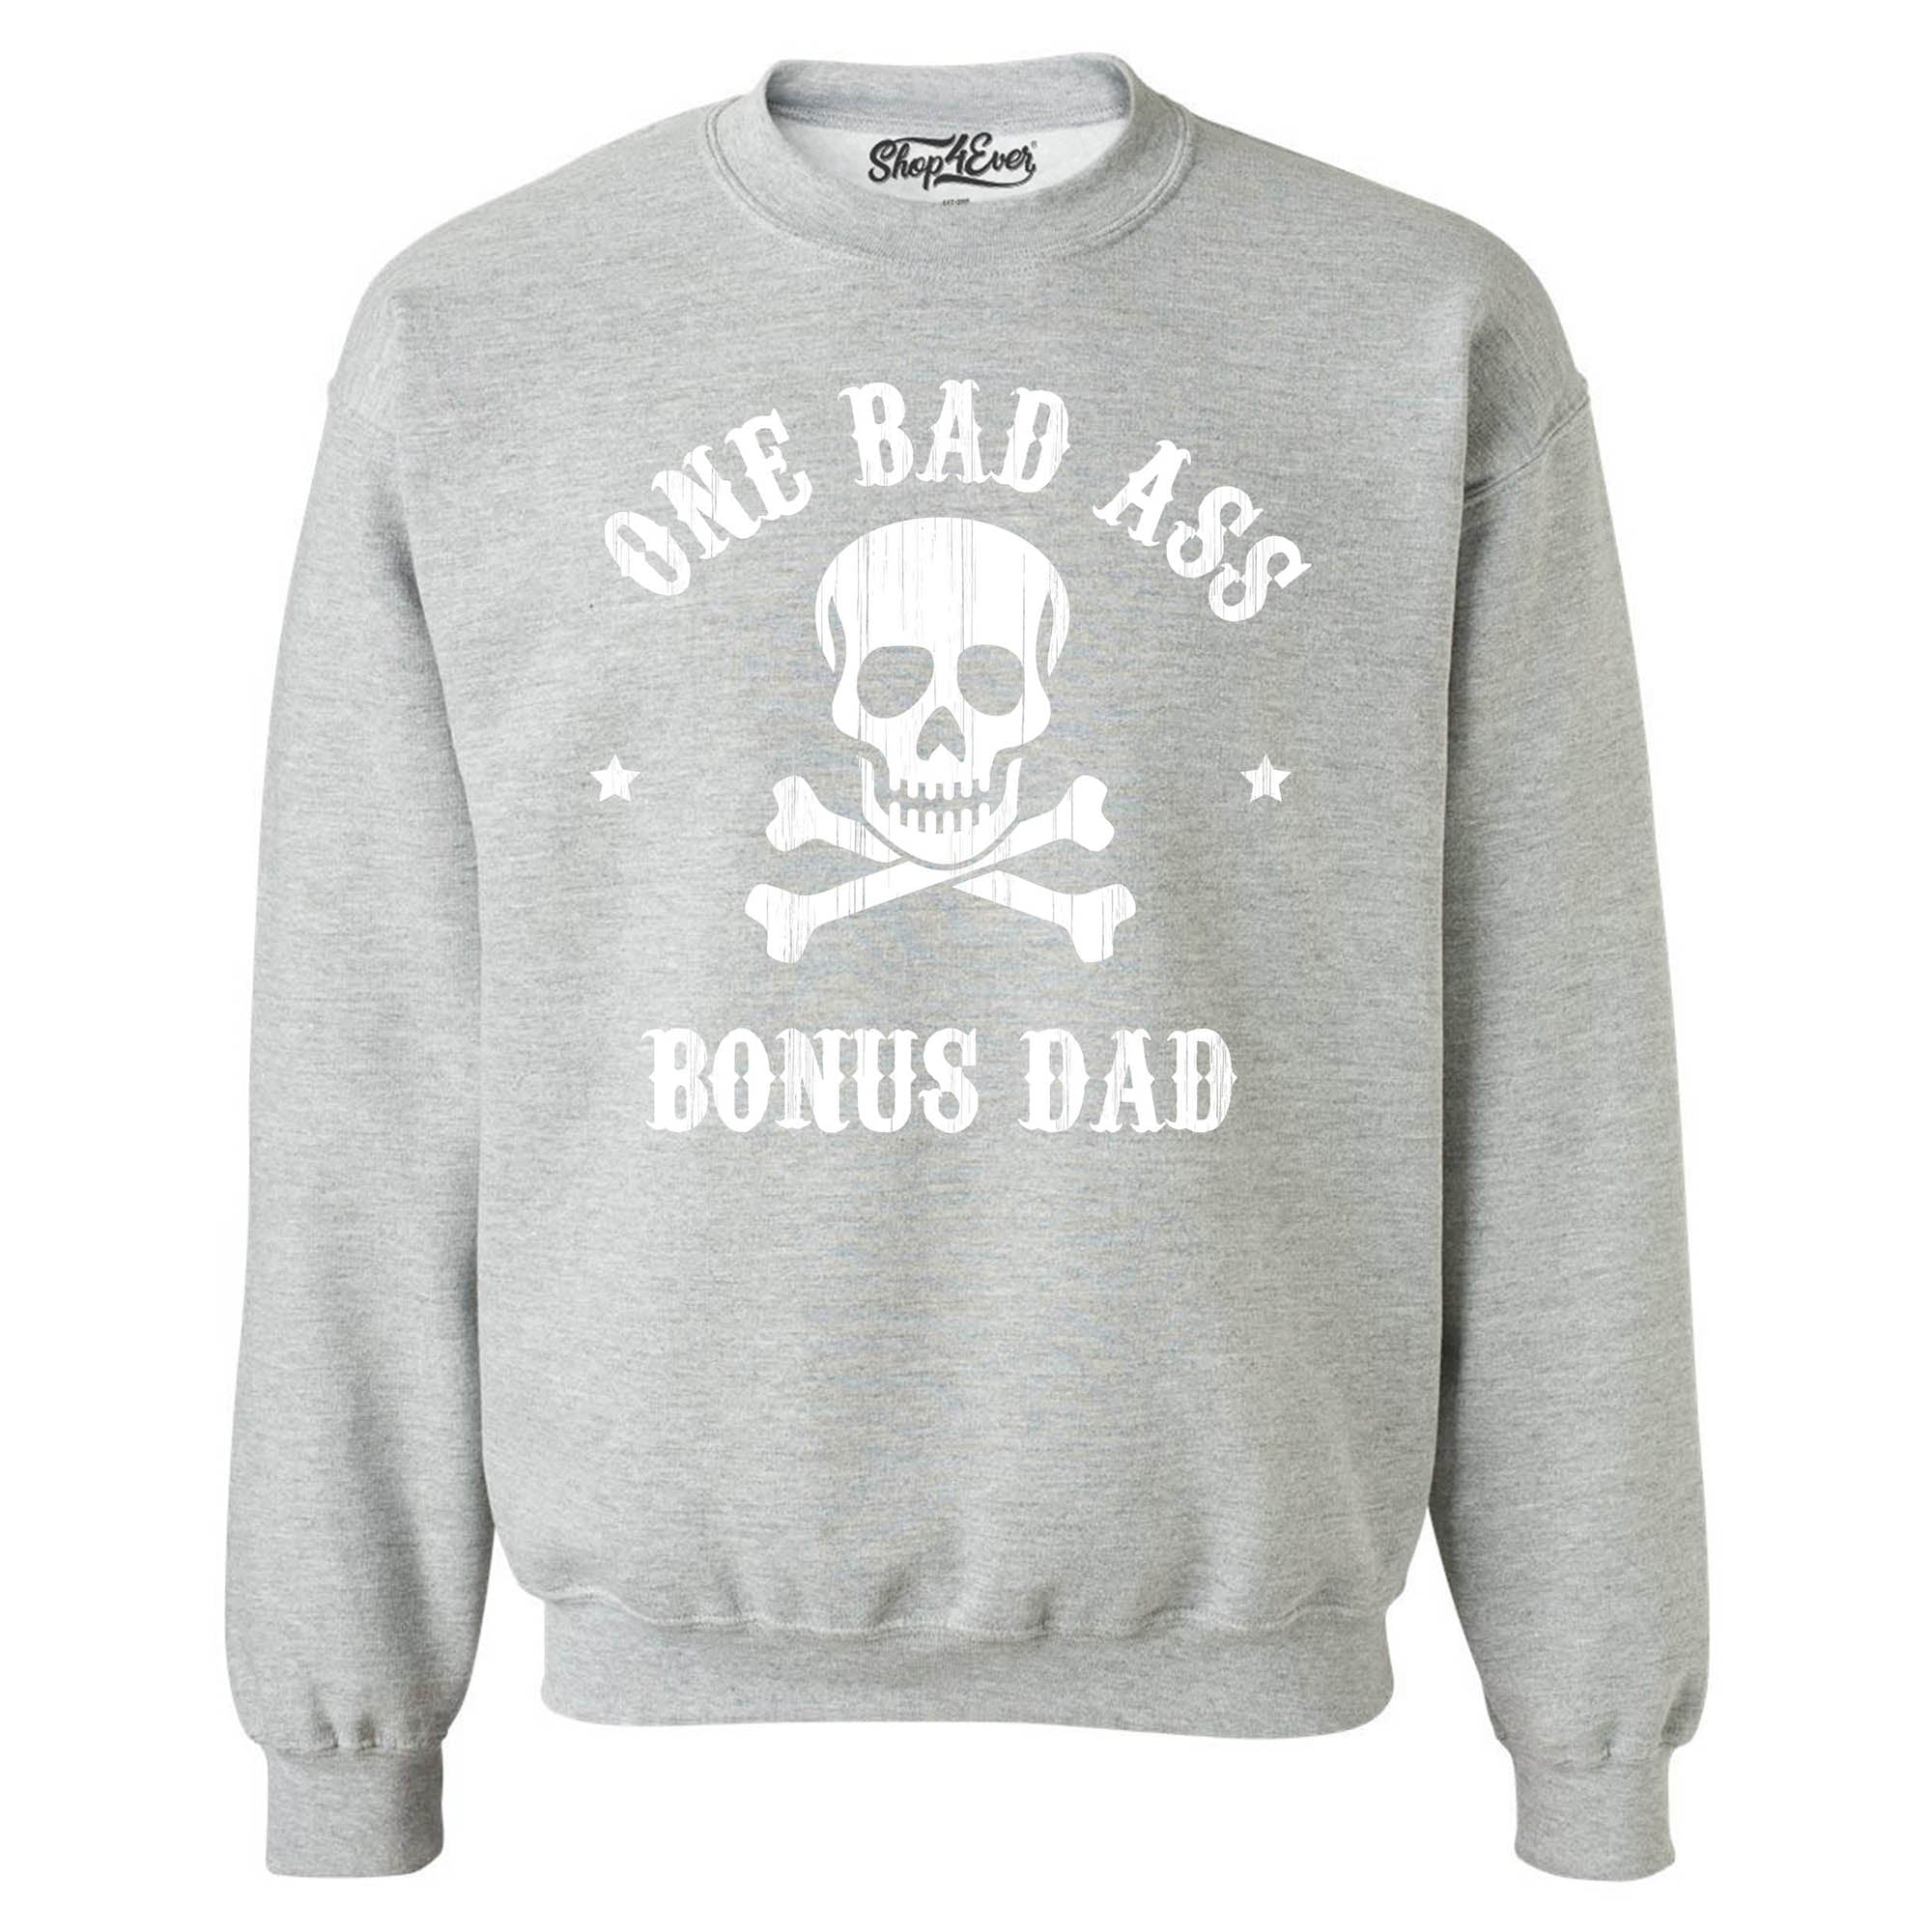 One Bad Ass Bonus Dad Crewneck Sweatshirts